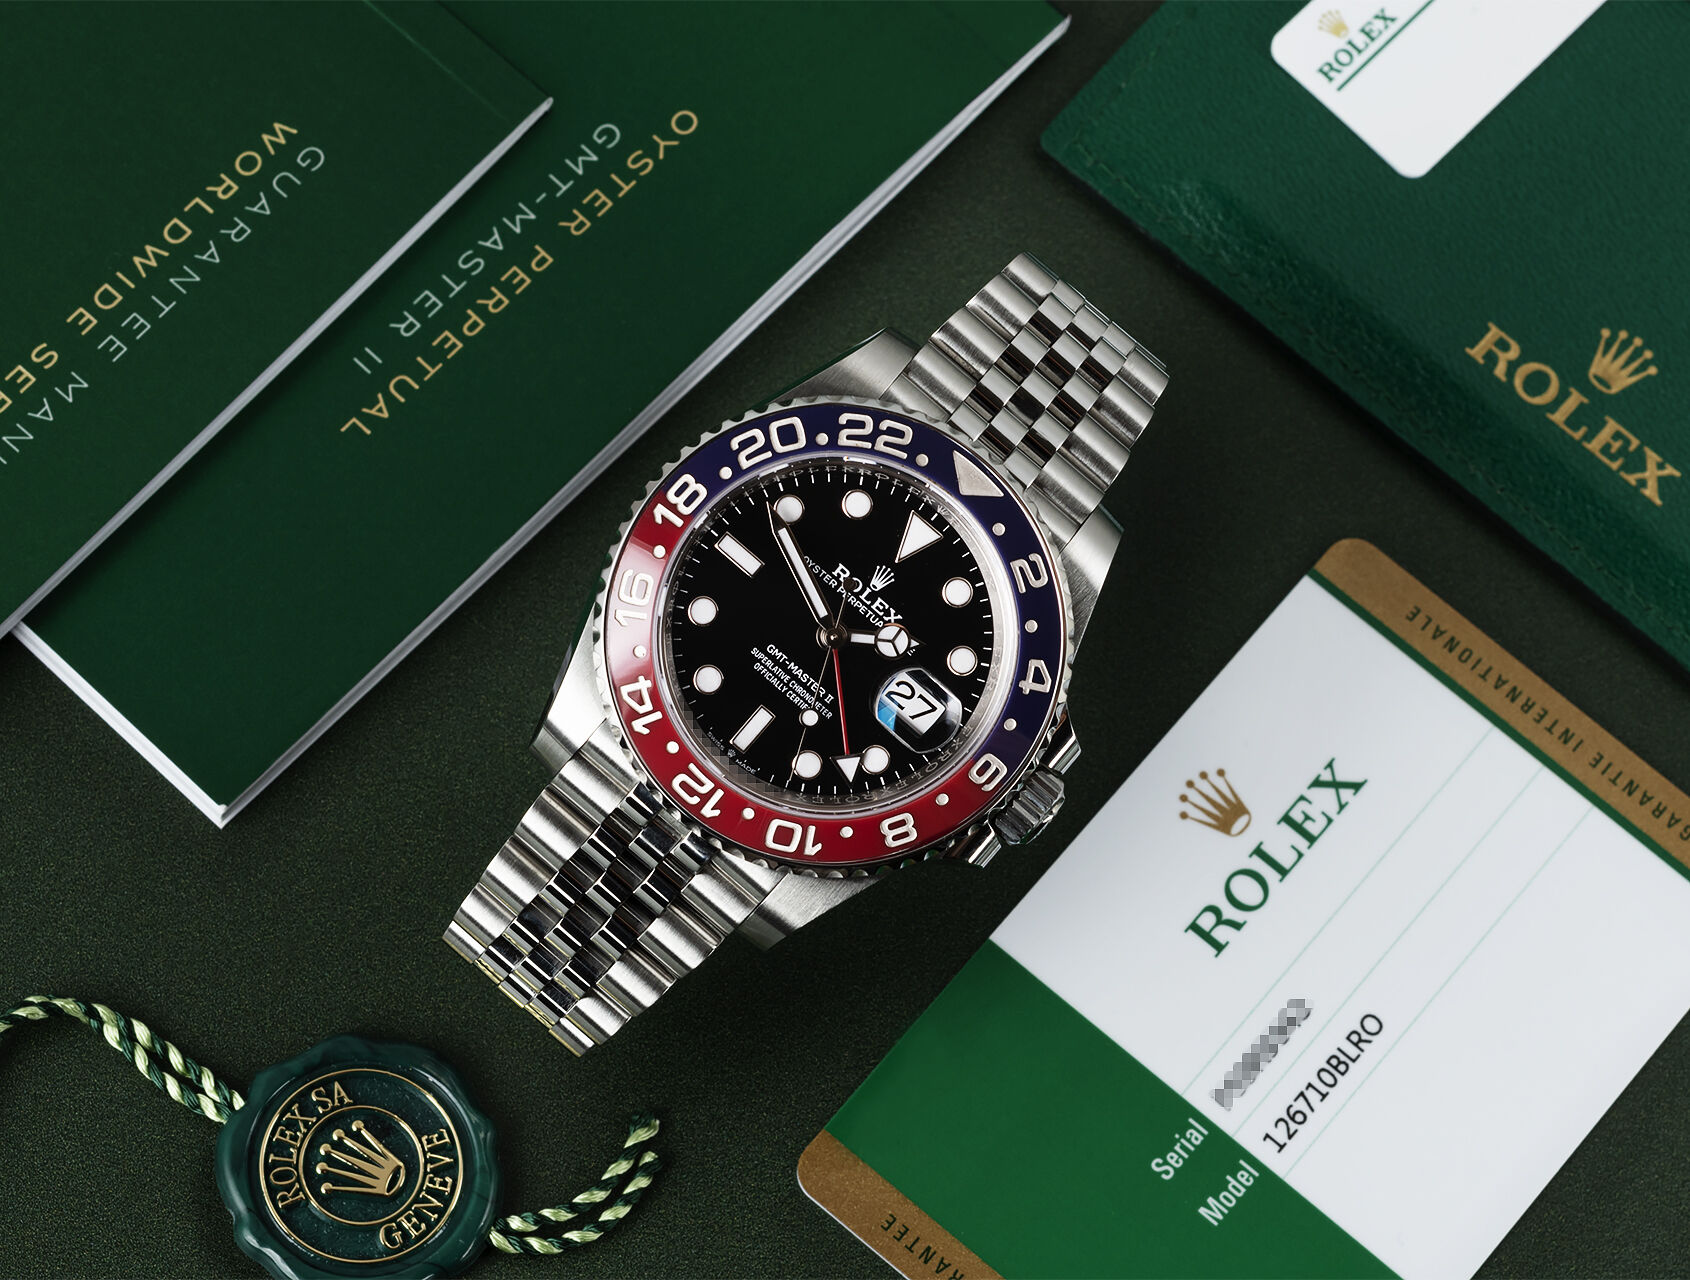 ref 126710BLRO | 126710BLRO - Box & Certificate | Rolex GMT-Master II